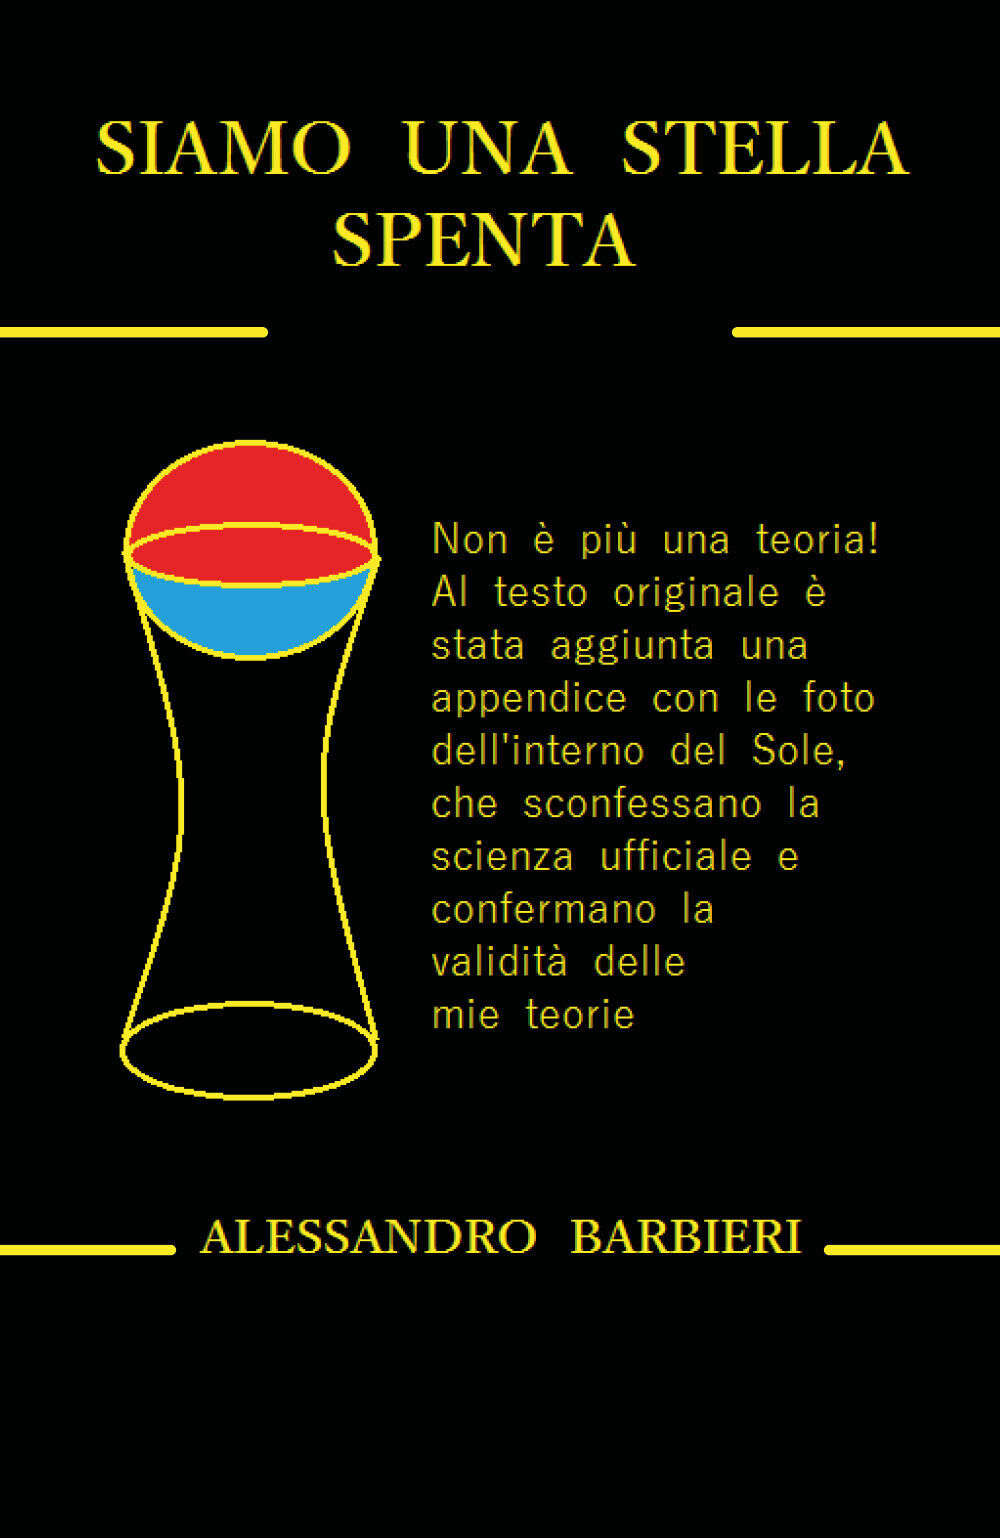 Siamo una stella spenta - Alessandro Barbieri,  2020,  Youcanprint